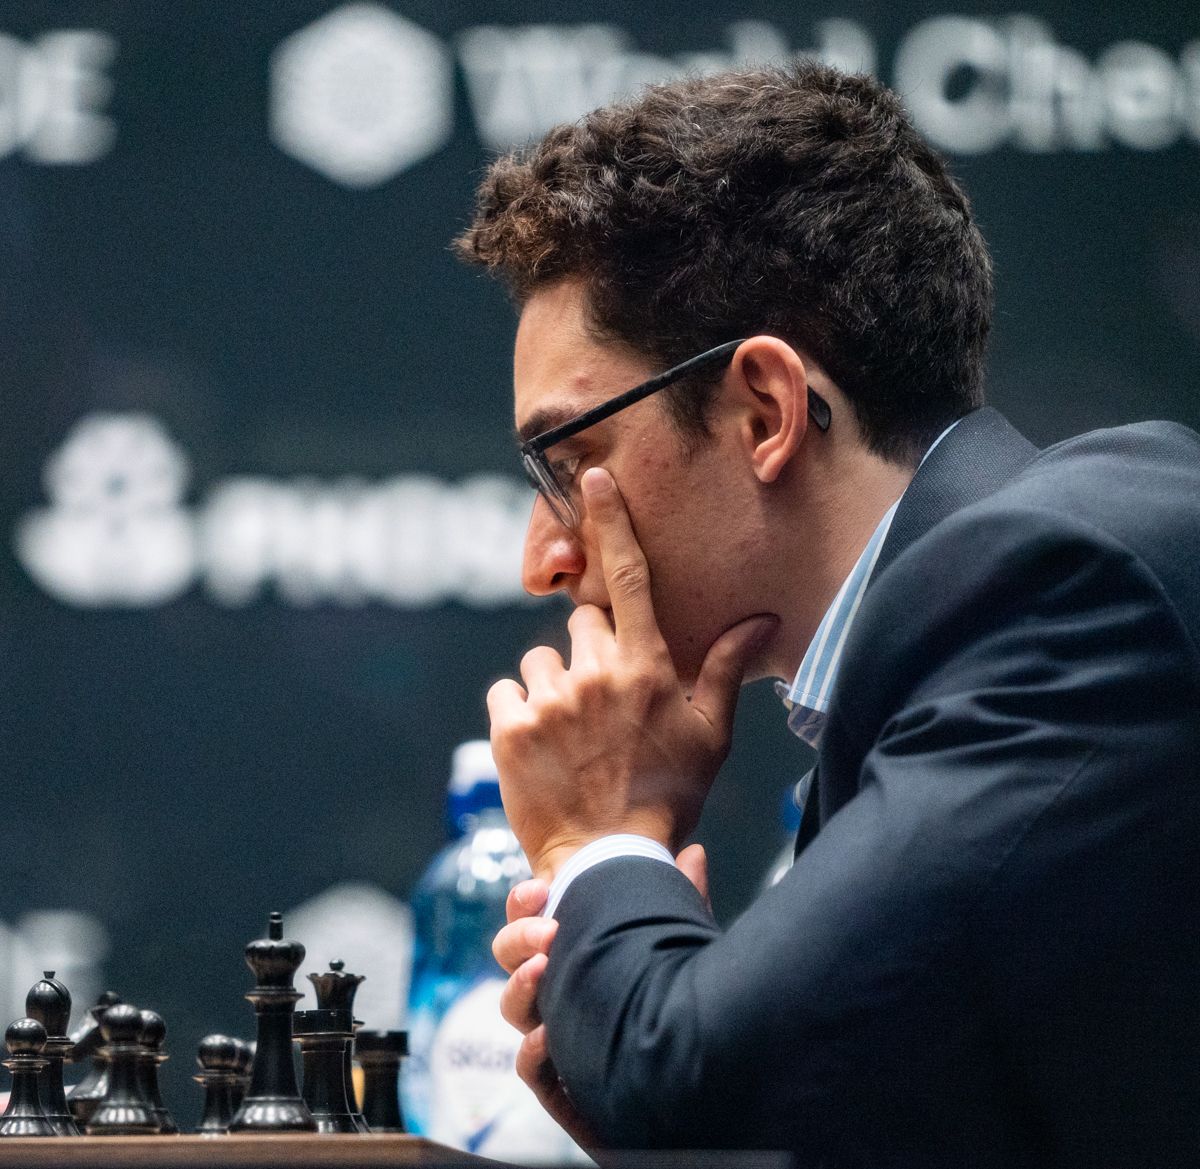 Nono empate seguido no mundial de xadrez quebra recorde histórico - Jornal  O Globo